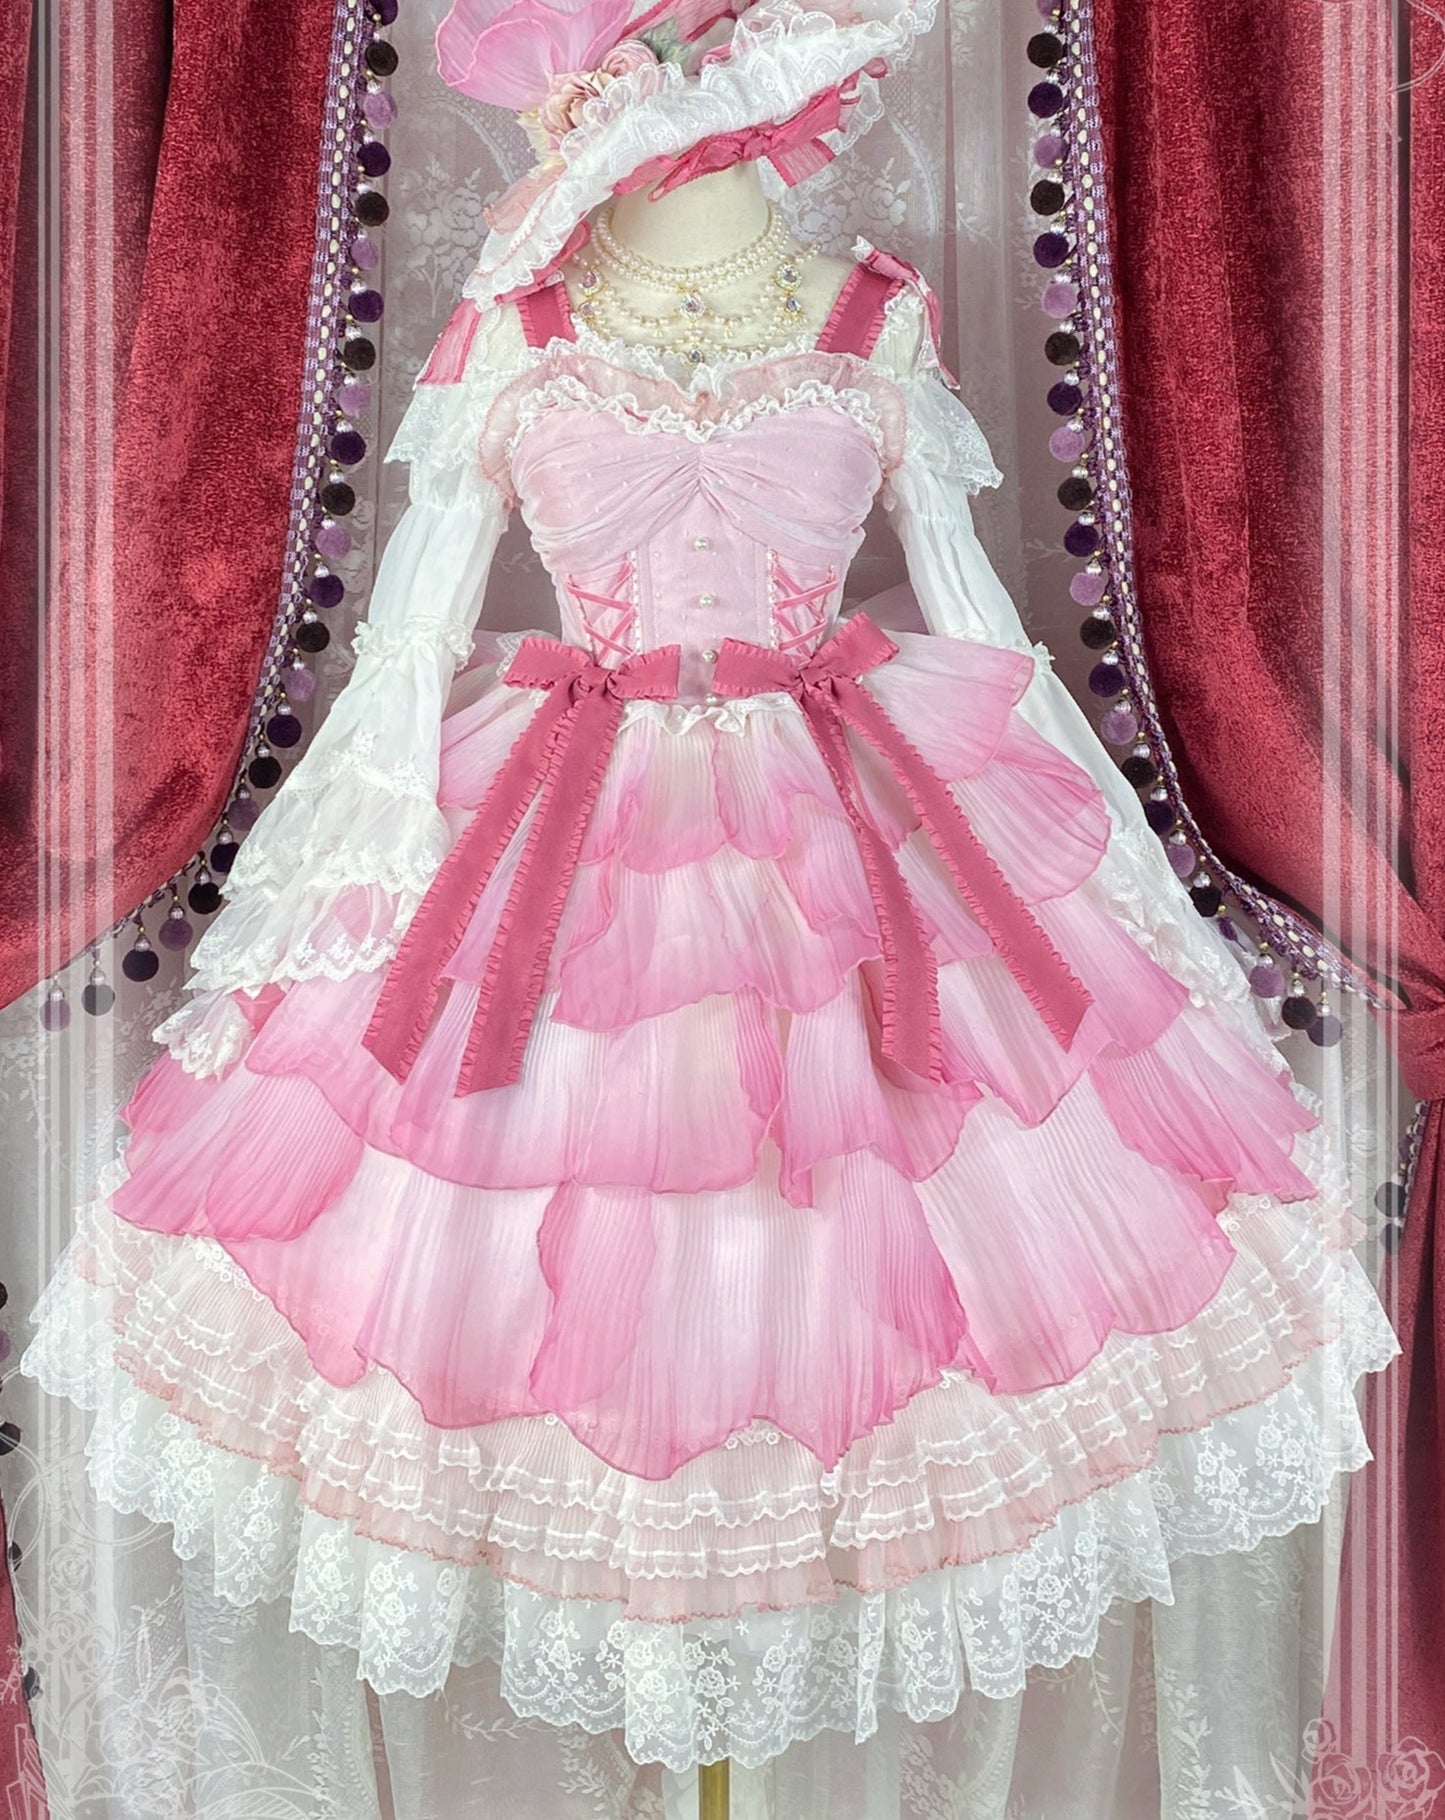 Petals swaying, double-flowered rose princess dress